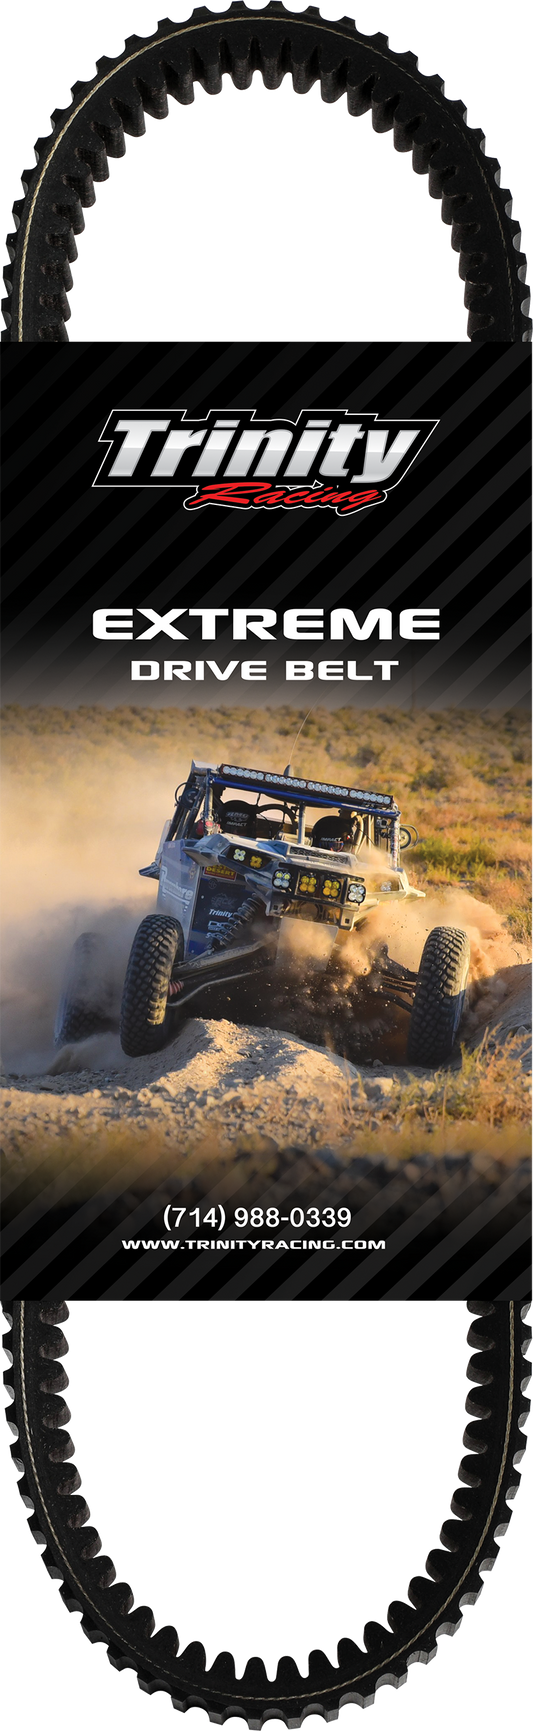 Trinity racing extreme drive belt - rzr xp 1000